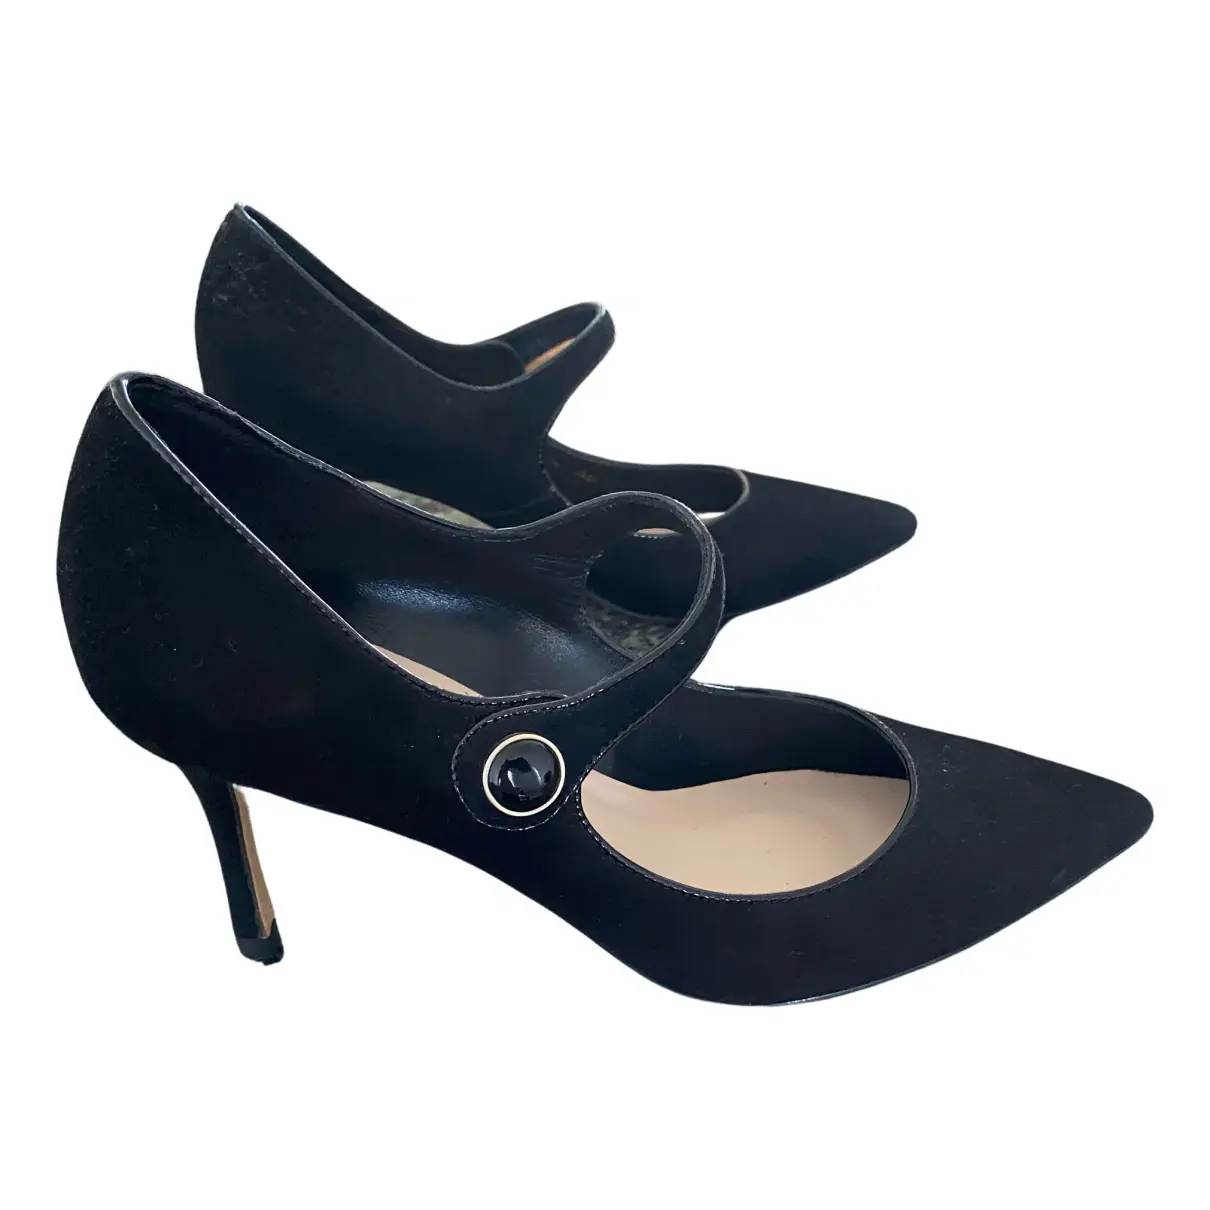 Leather heels Lk Bennett